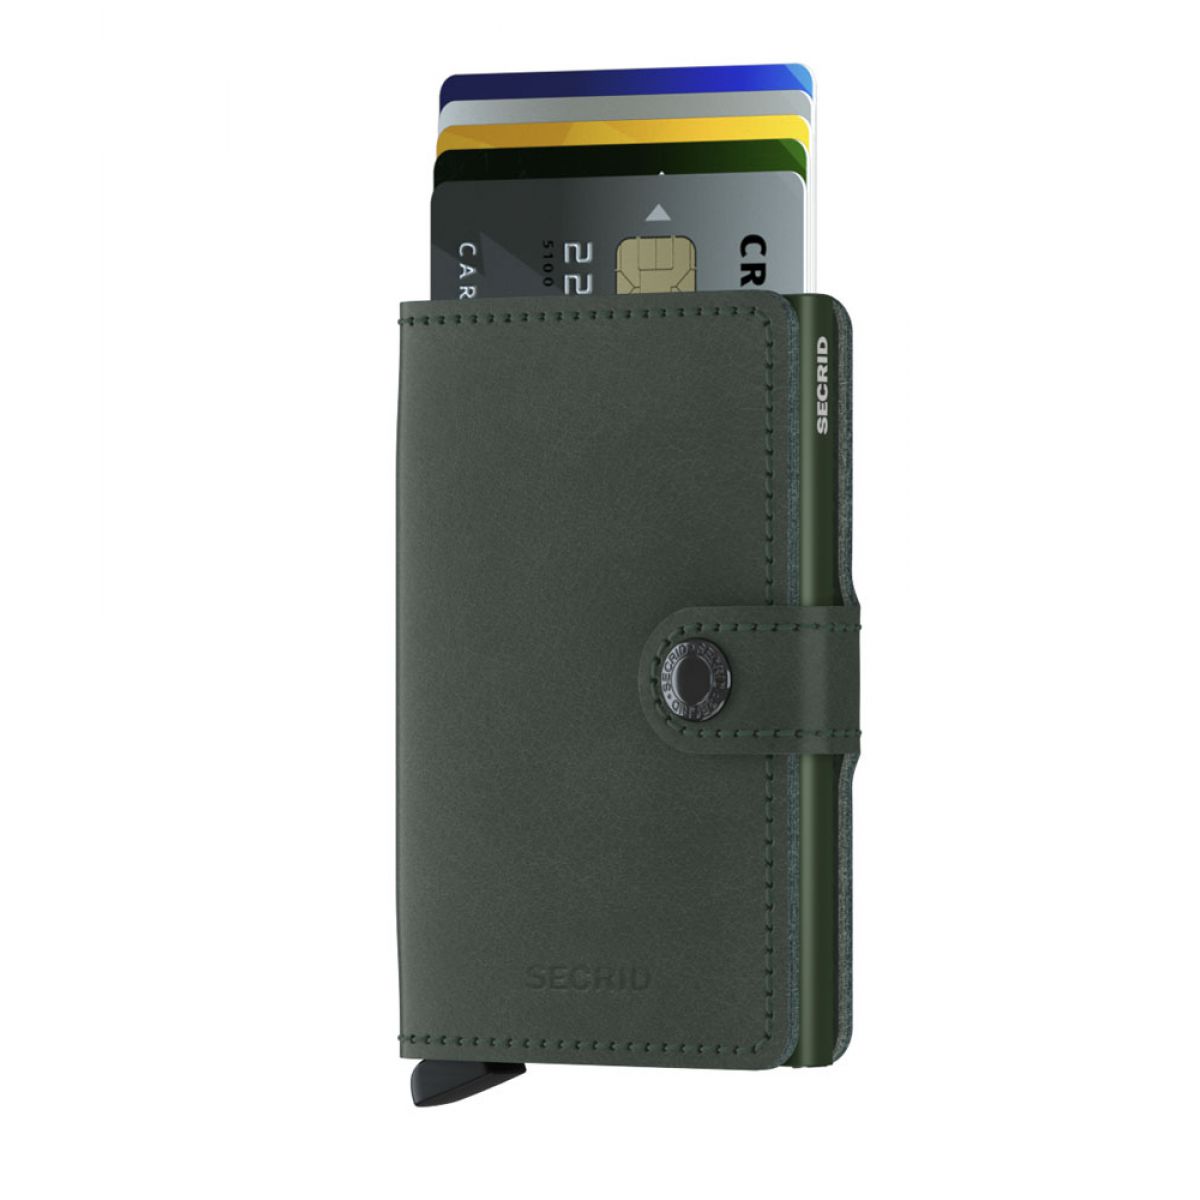 Vrijwillig los van mengsel Secrid mini wallet leather original green - M-green - 41,28€